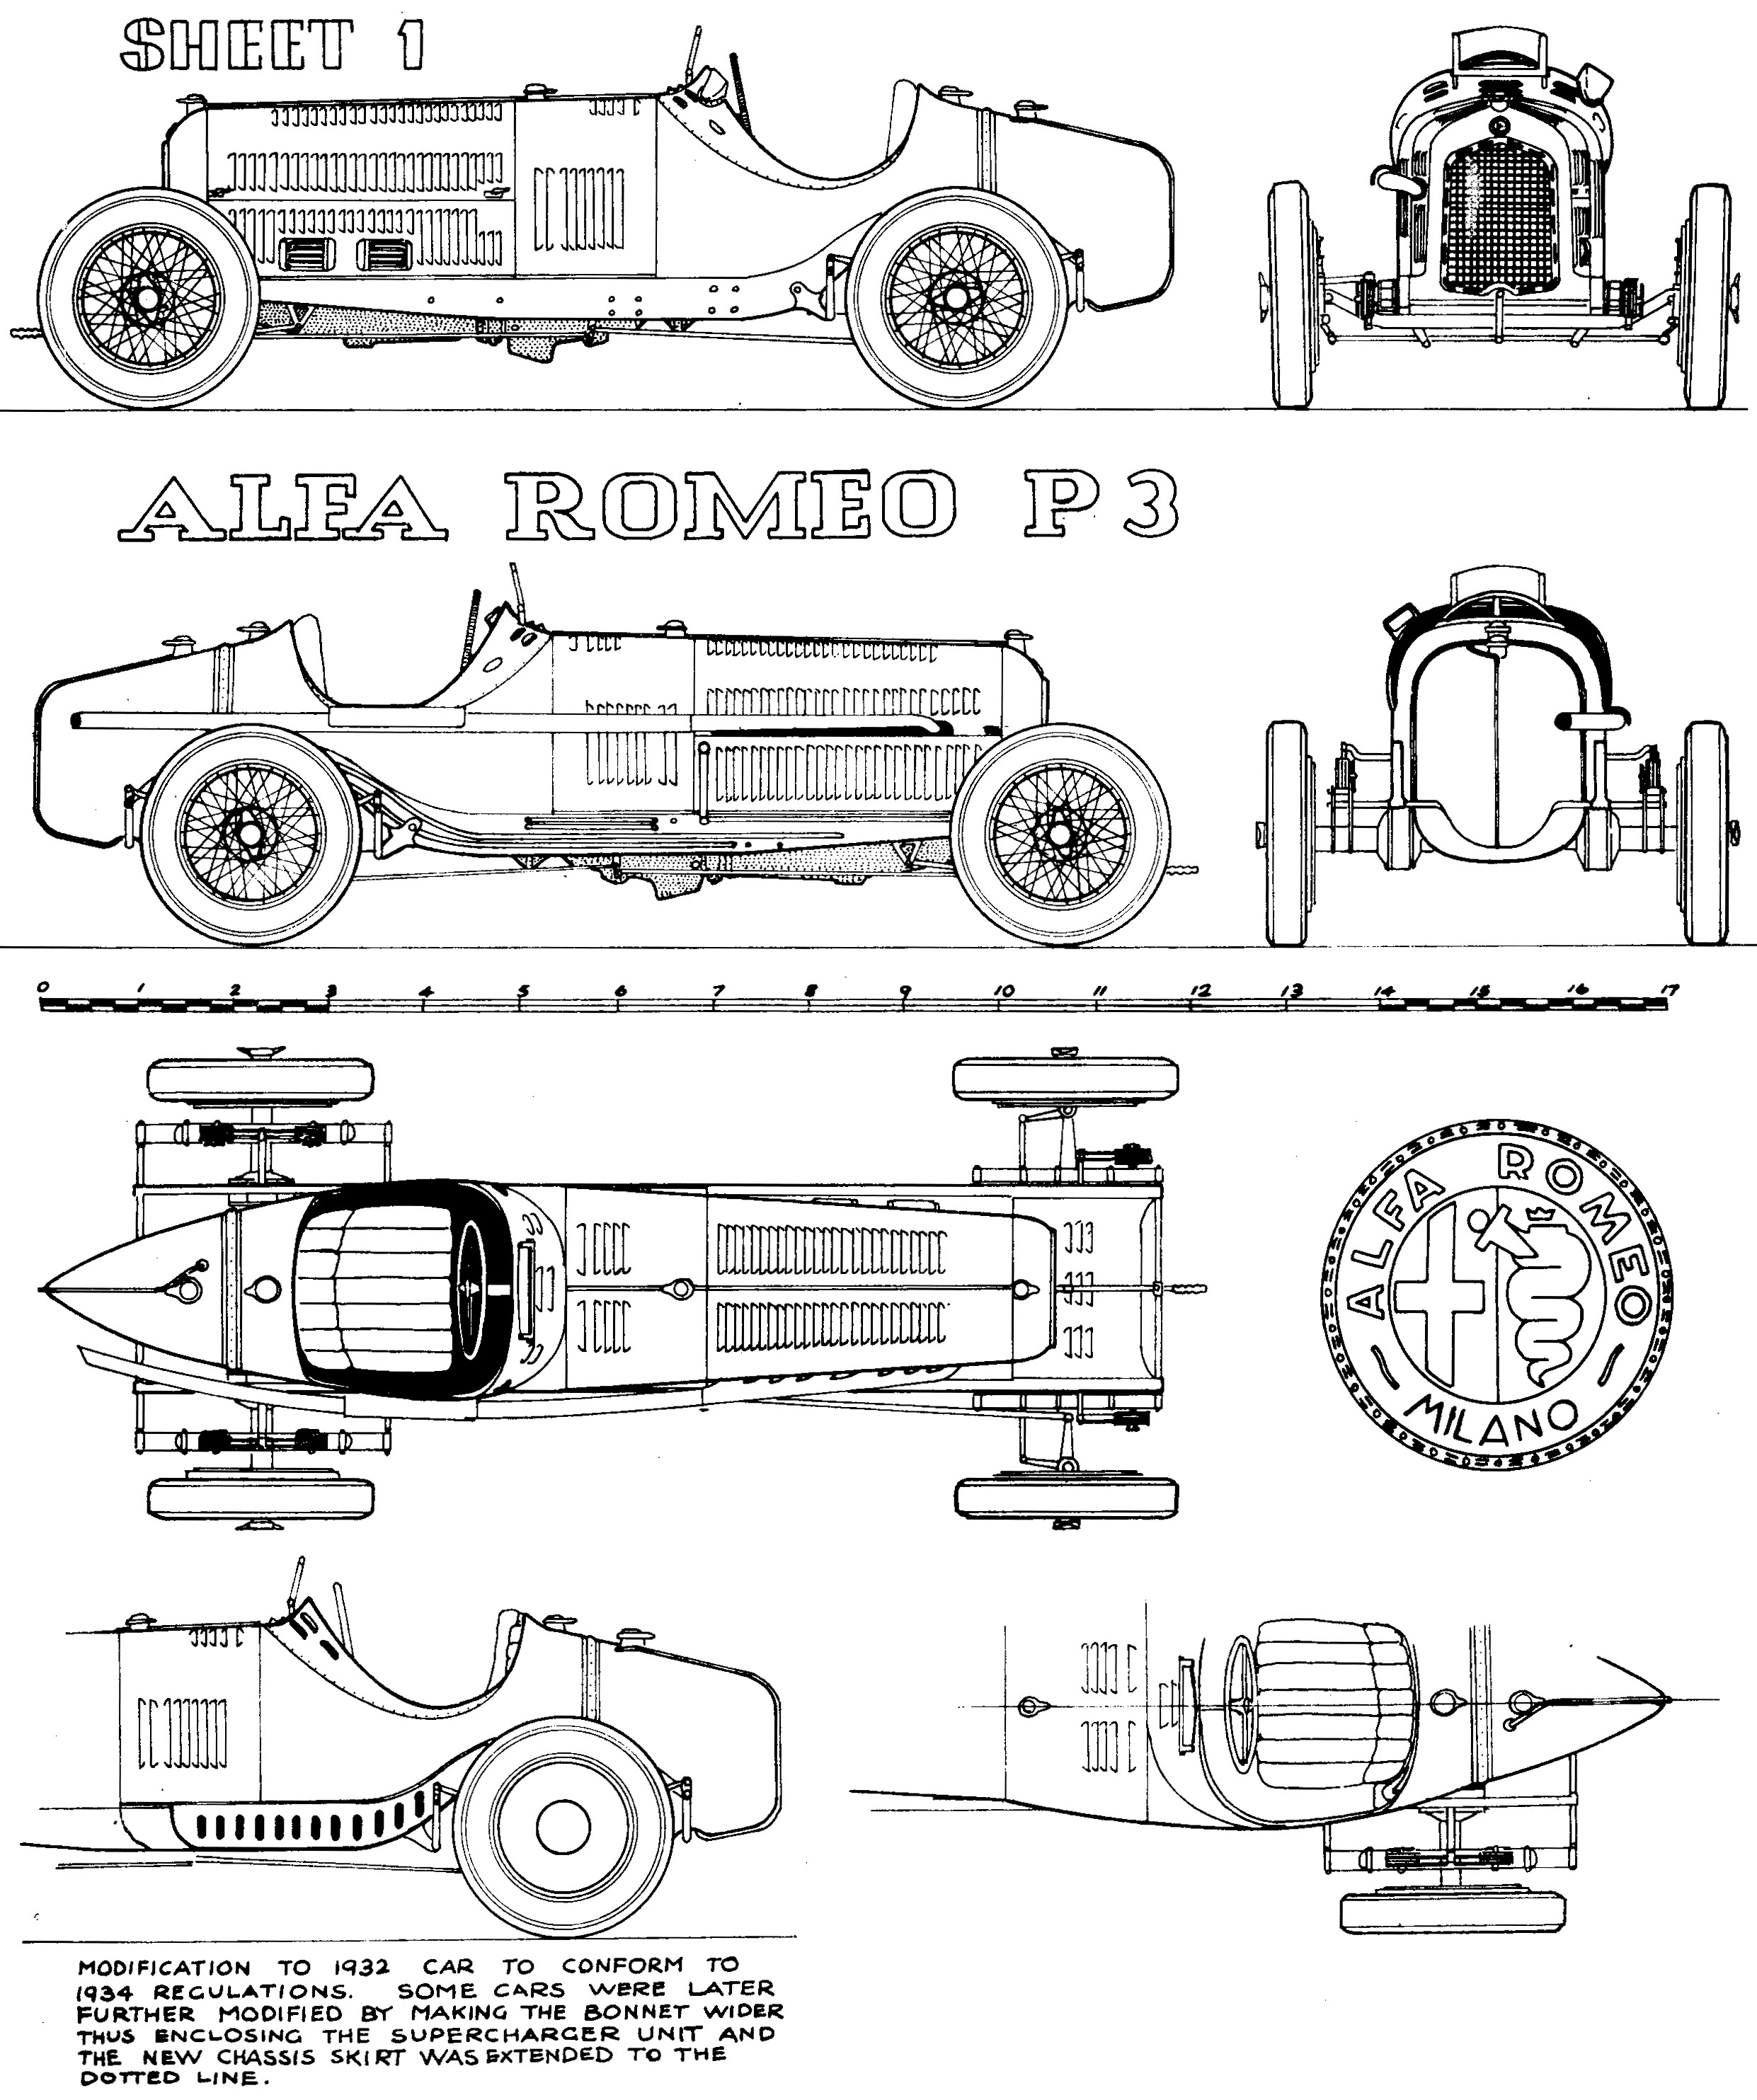 Diagram Of Car Engine How It Works Alfa Romeo P3 1932 33 Smcars Net Car Blueprints forum Of Diagram Of Car Engine How It Works